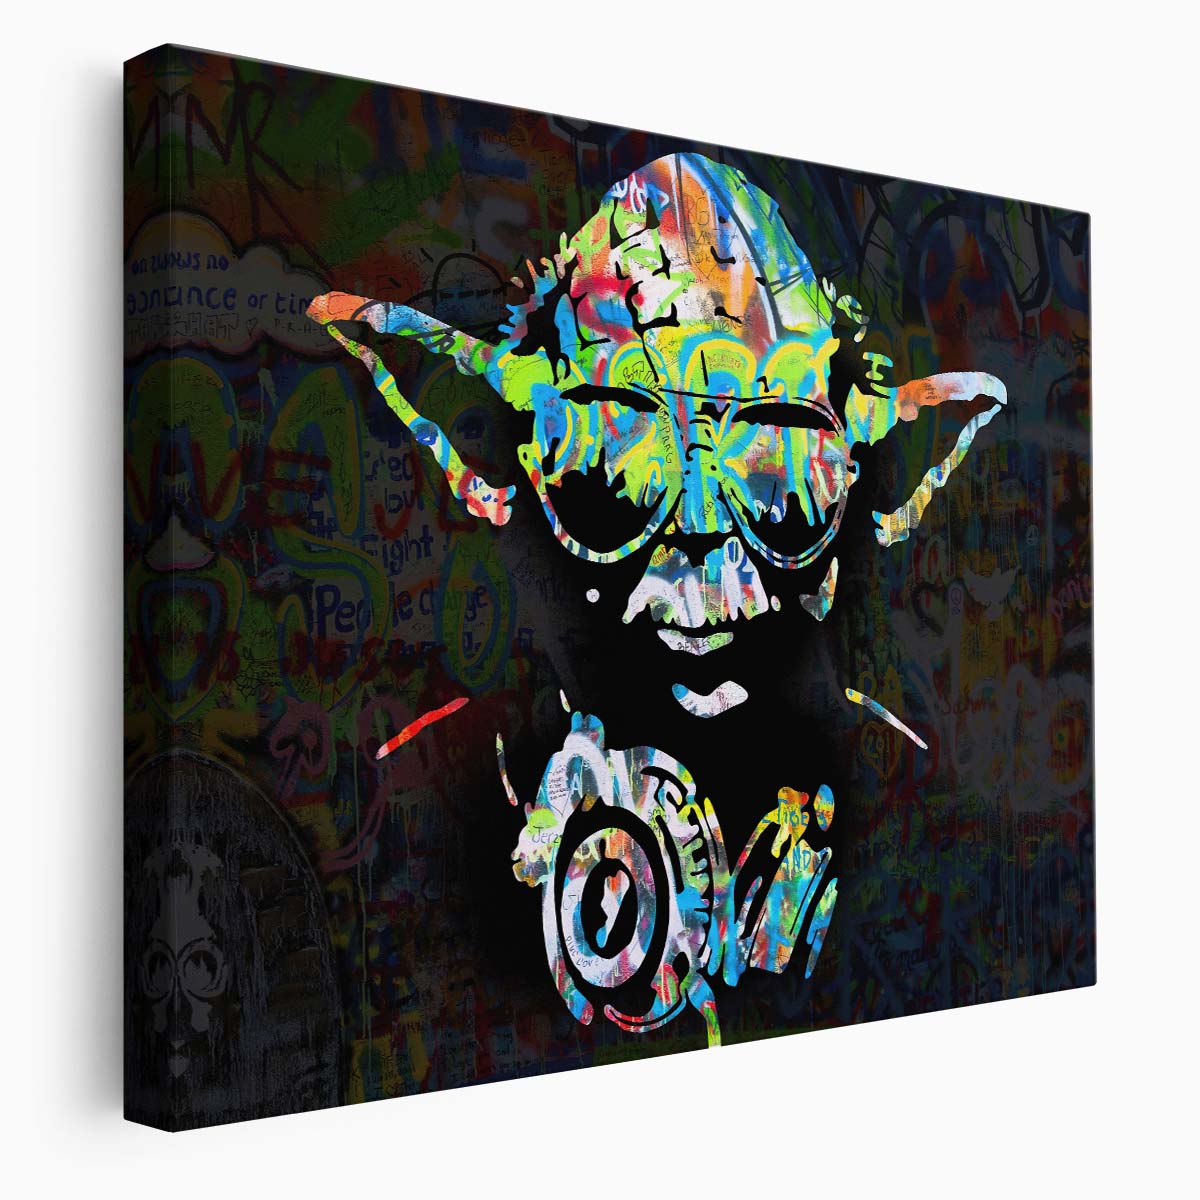 DJ Yoda Star Wars Graffiti Wall Art by Luxuriance Designs. Made in USA.